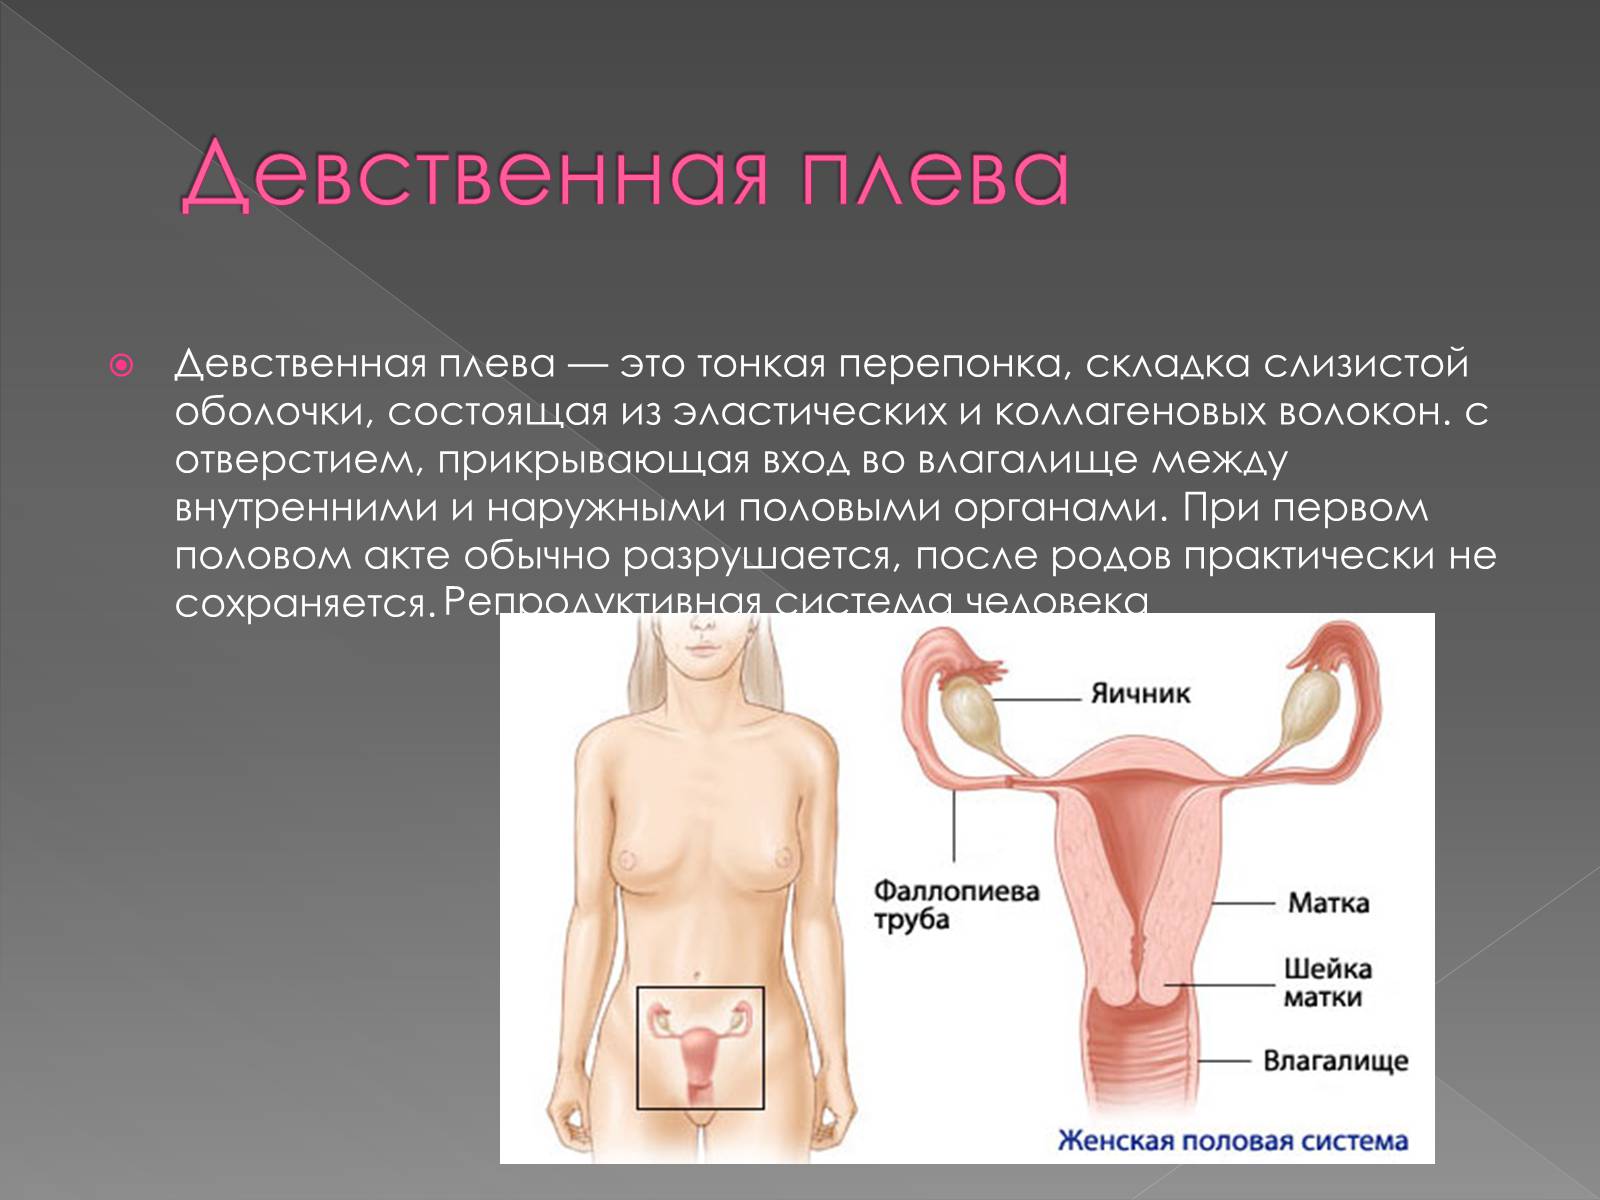 Презентація на тему «Женская половая система» - Слайд #14